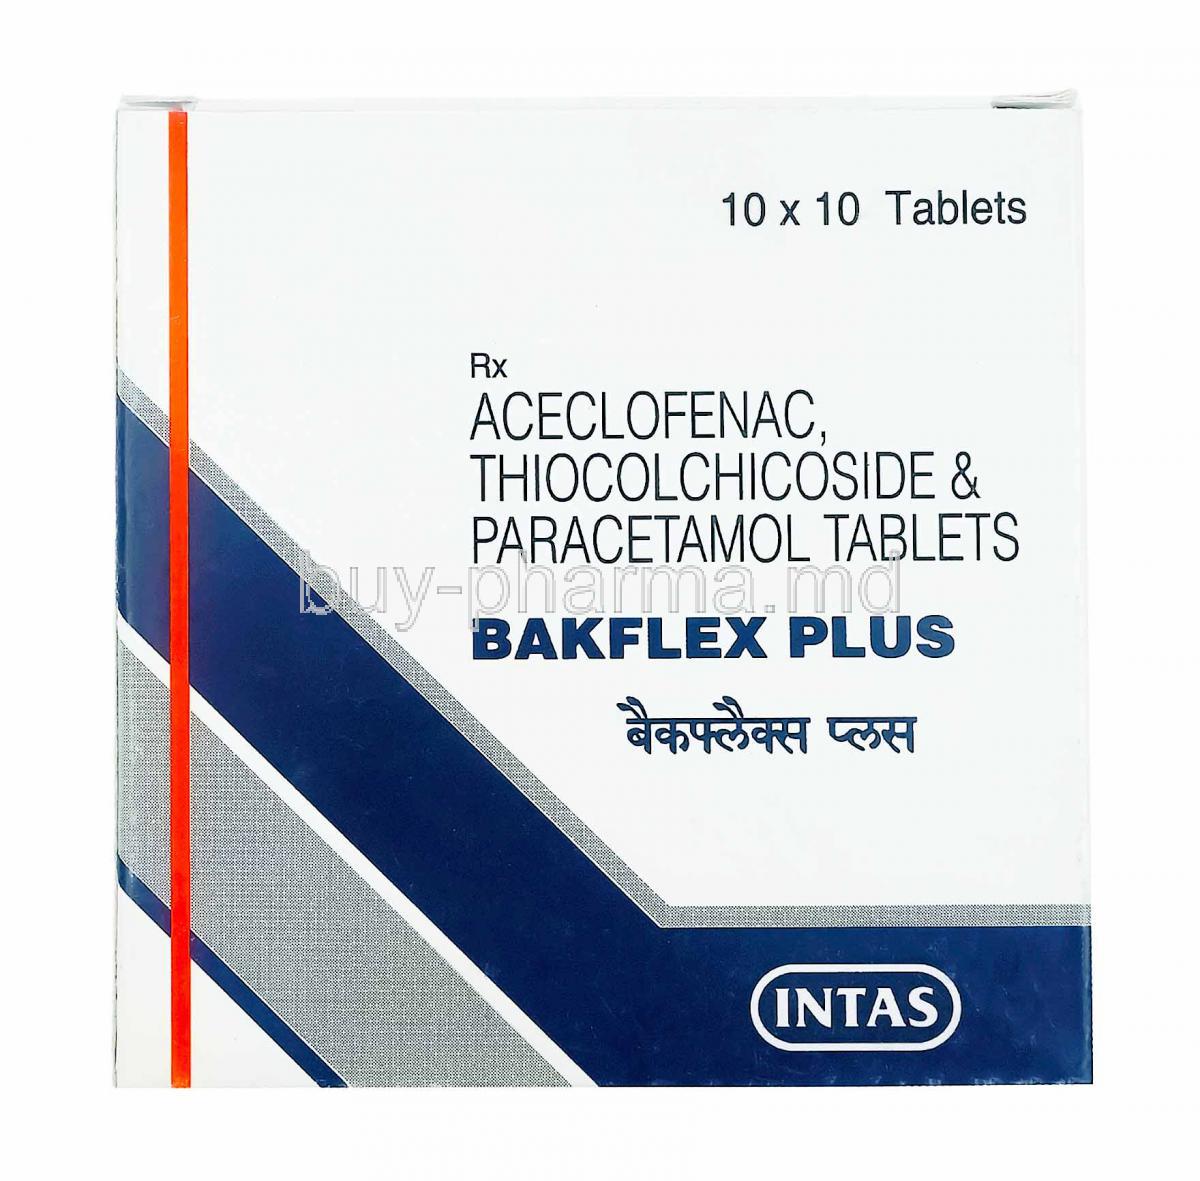 Bakflex Plus, Thiocolchicoside, Aceclofenac and Paracetamol